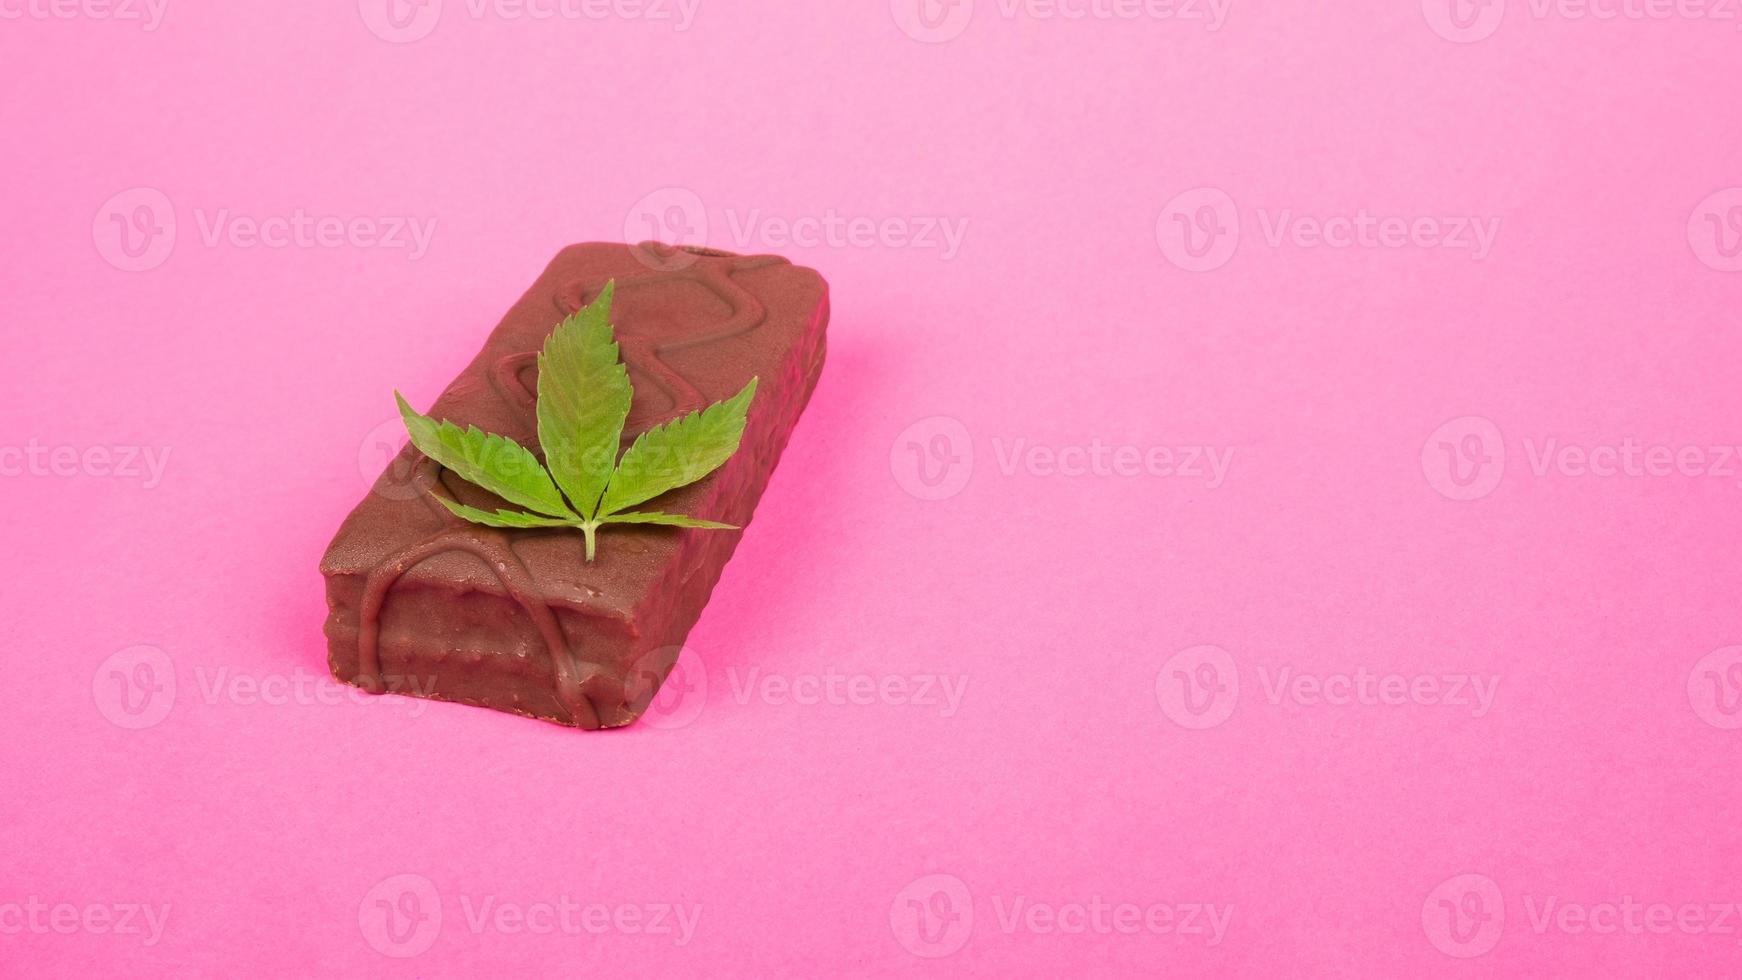 cannabis söt mat godis på rosa bakgrund med kopia utrymme foto